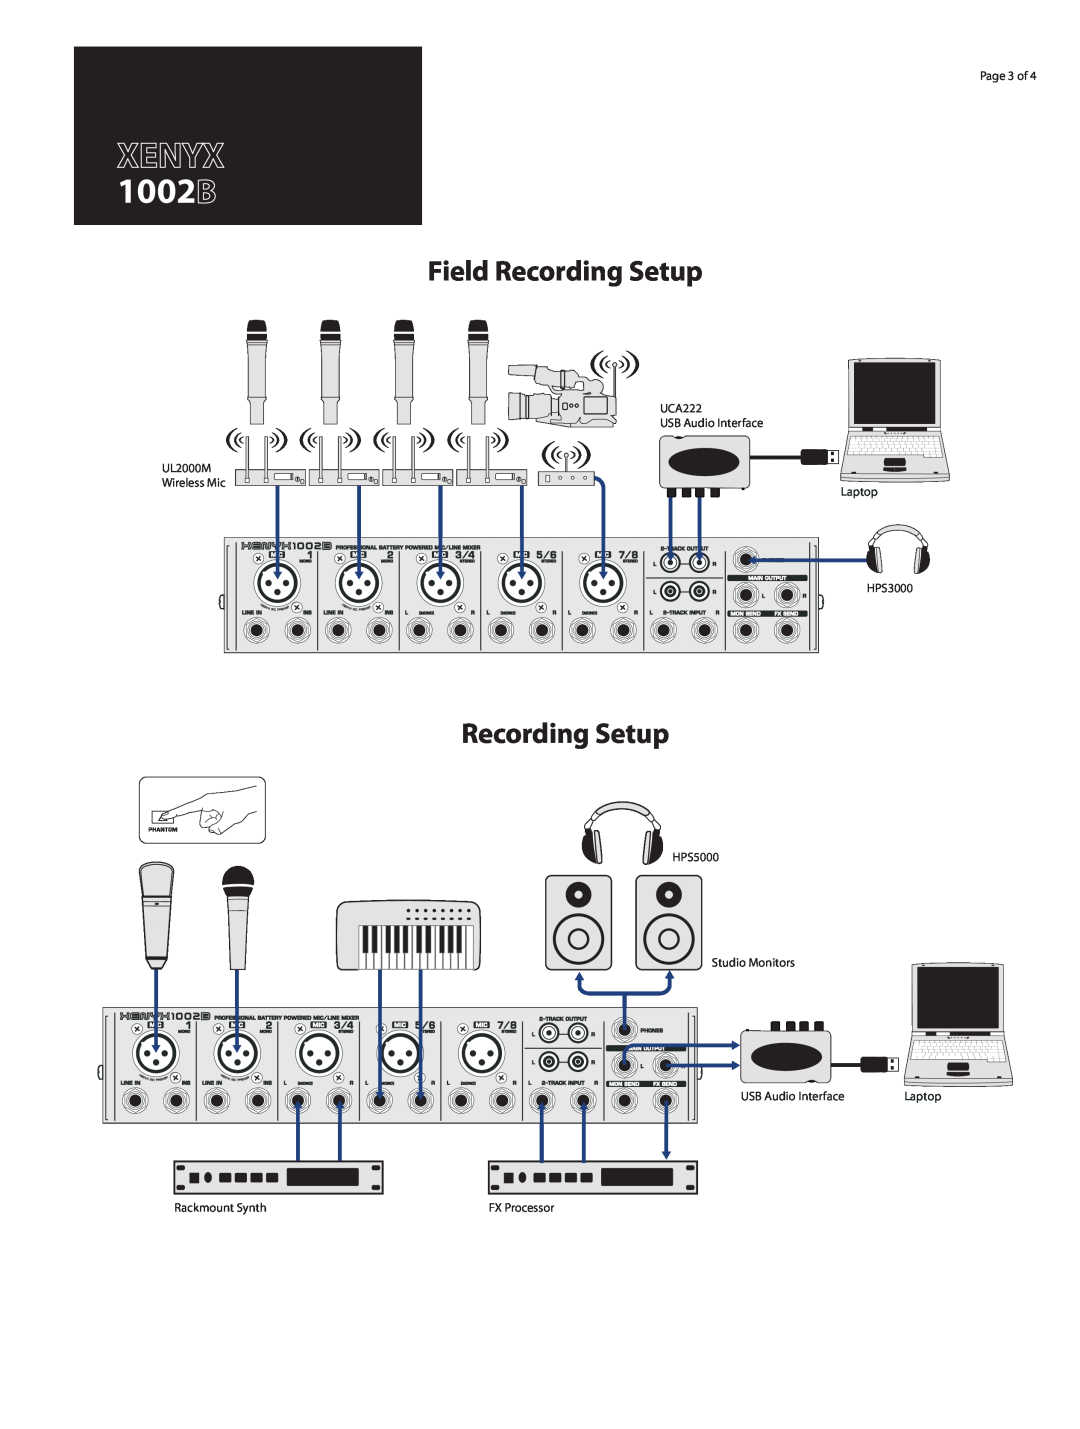 Behringer manual Field Recording Setup, XENYX 1002B, Laptop, FX Processor 